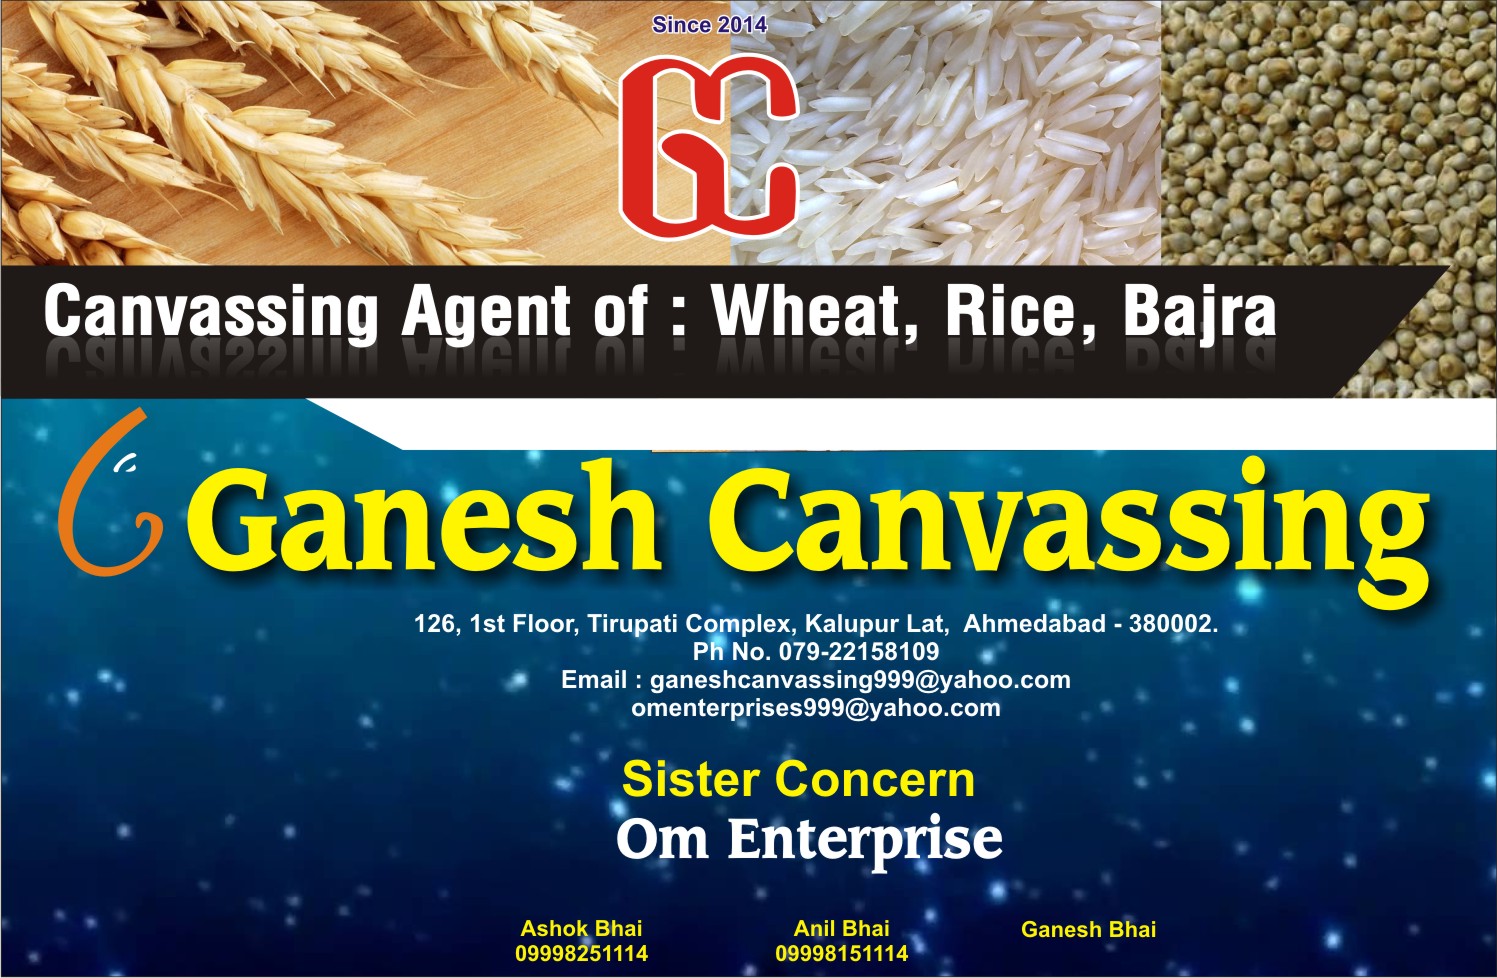 Ganesh Canvassing